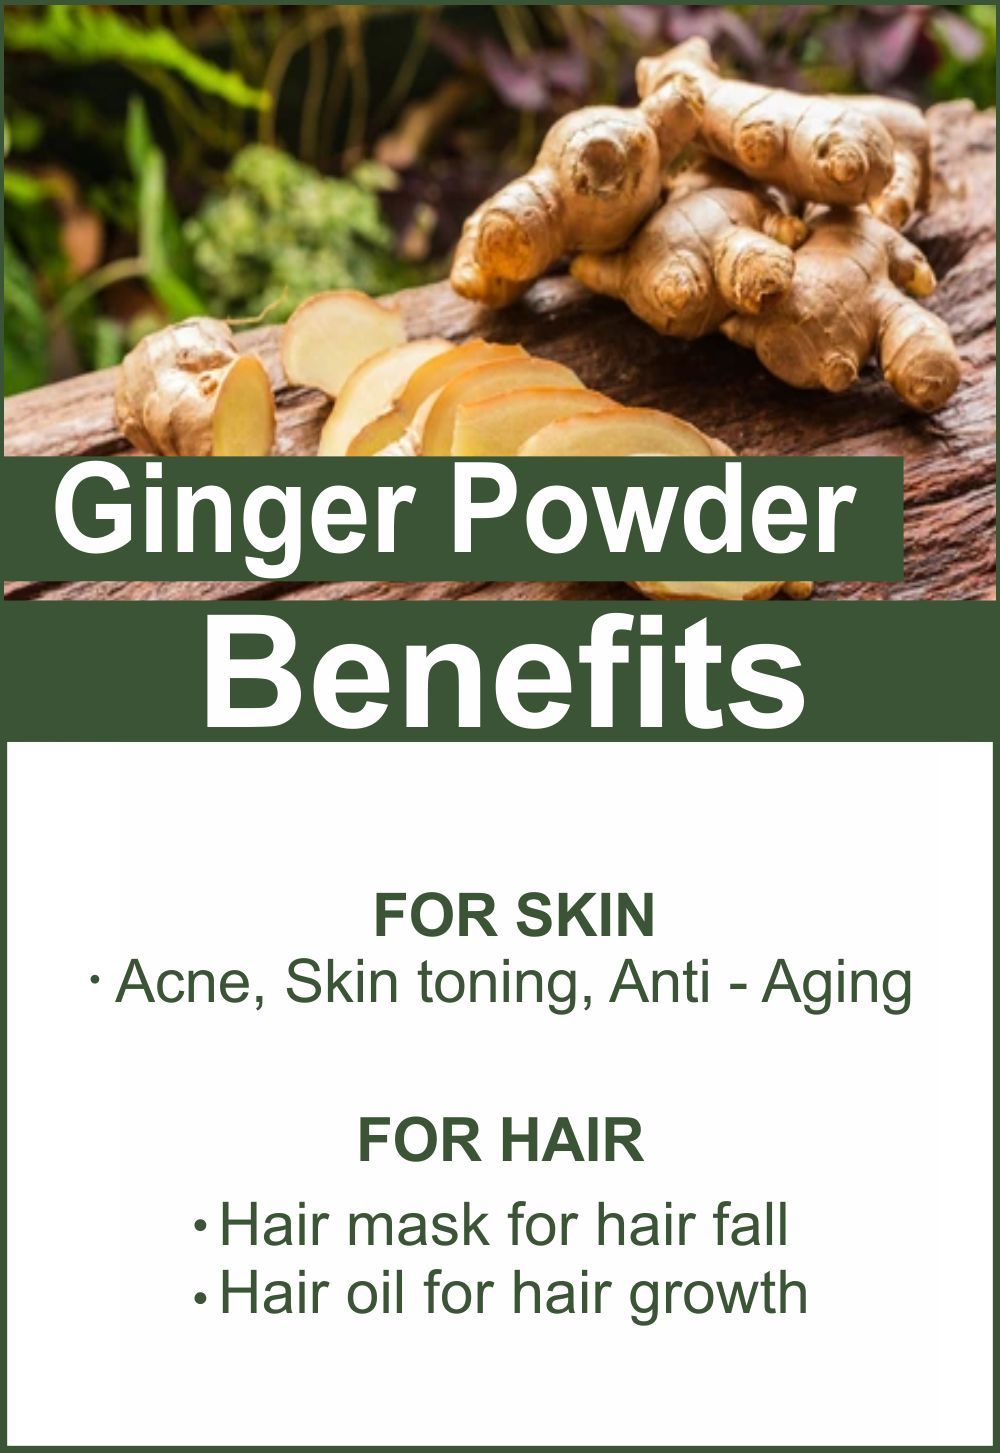 Jatamansi Powder (Hair Care) & Ginger Powder (Skin Care) Pack of 2